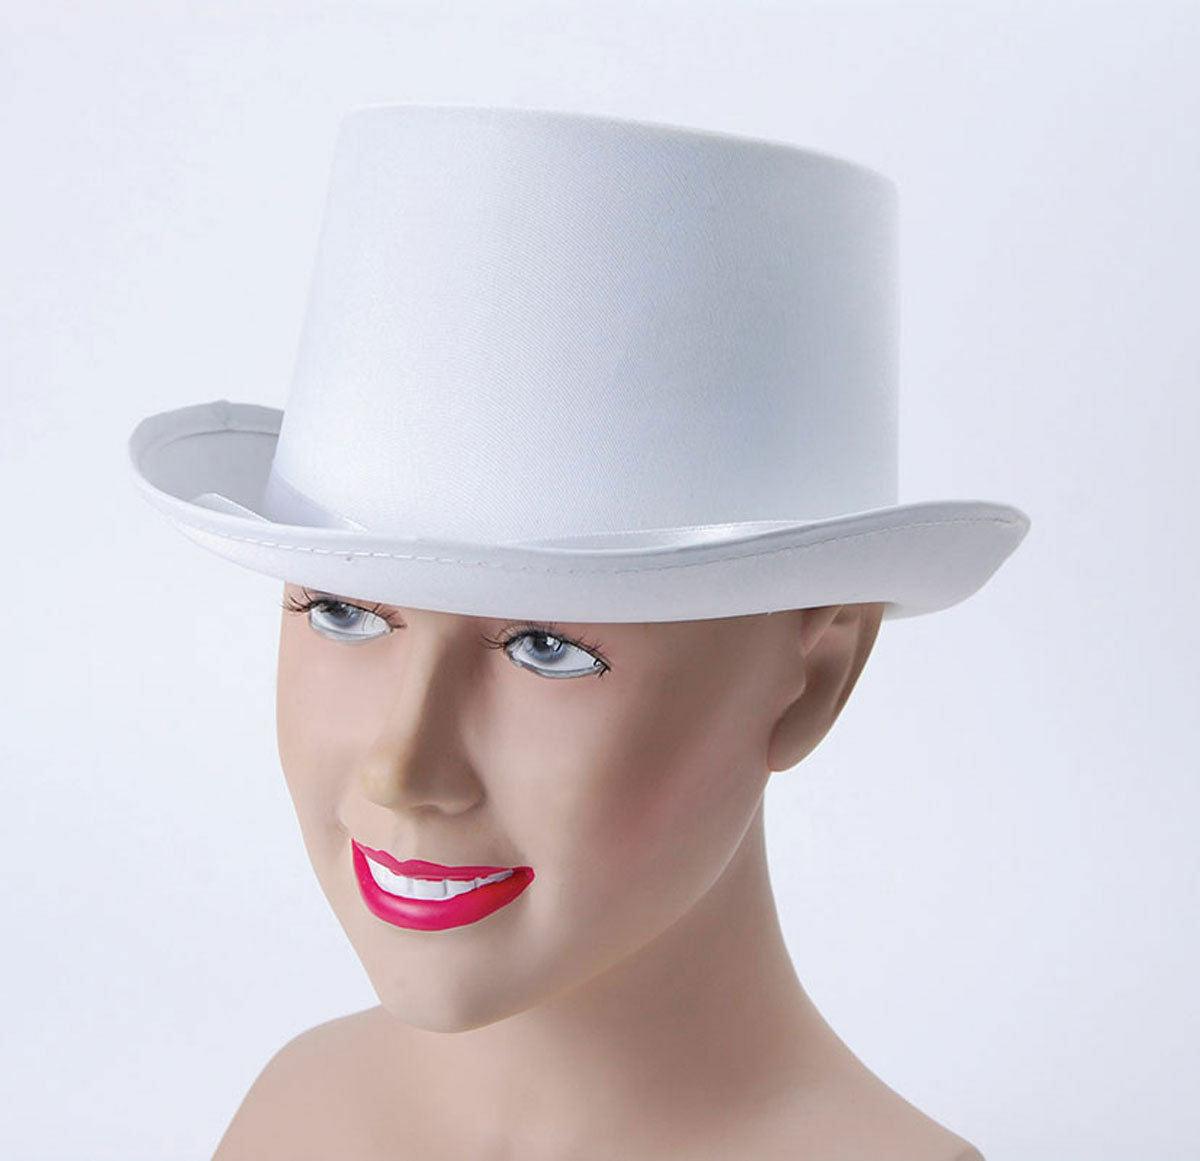 Satin White Hat Braces Tie Cigar Tommy gun Fancy Costume Accessories lot - Labreeze